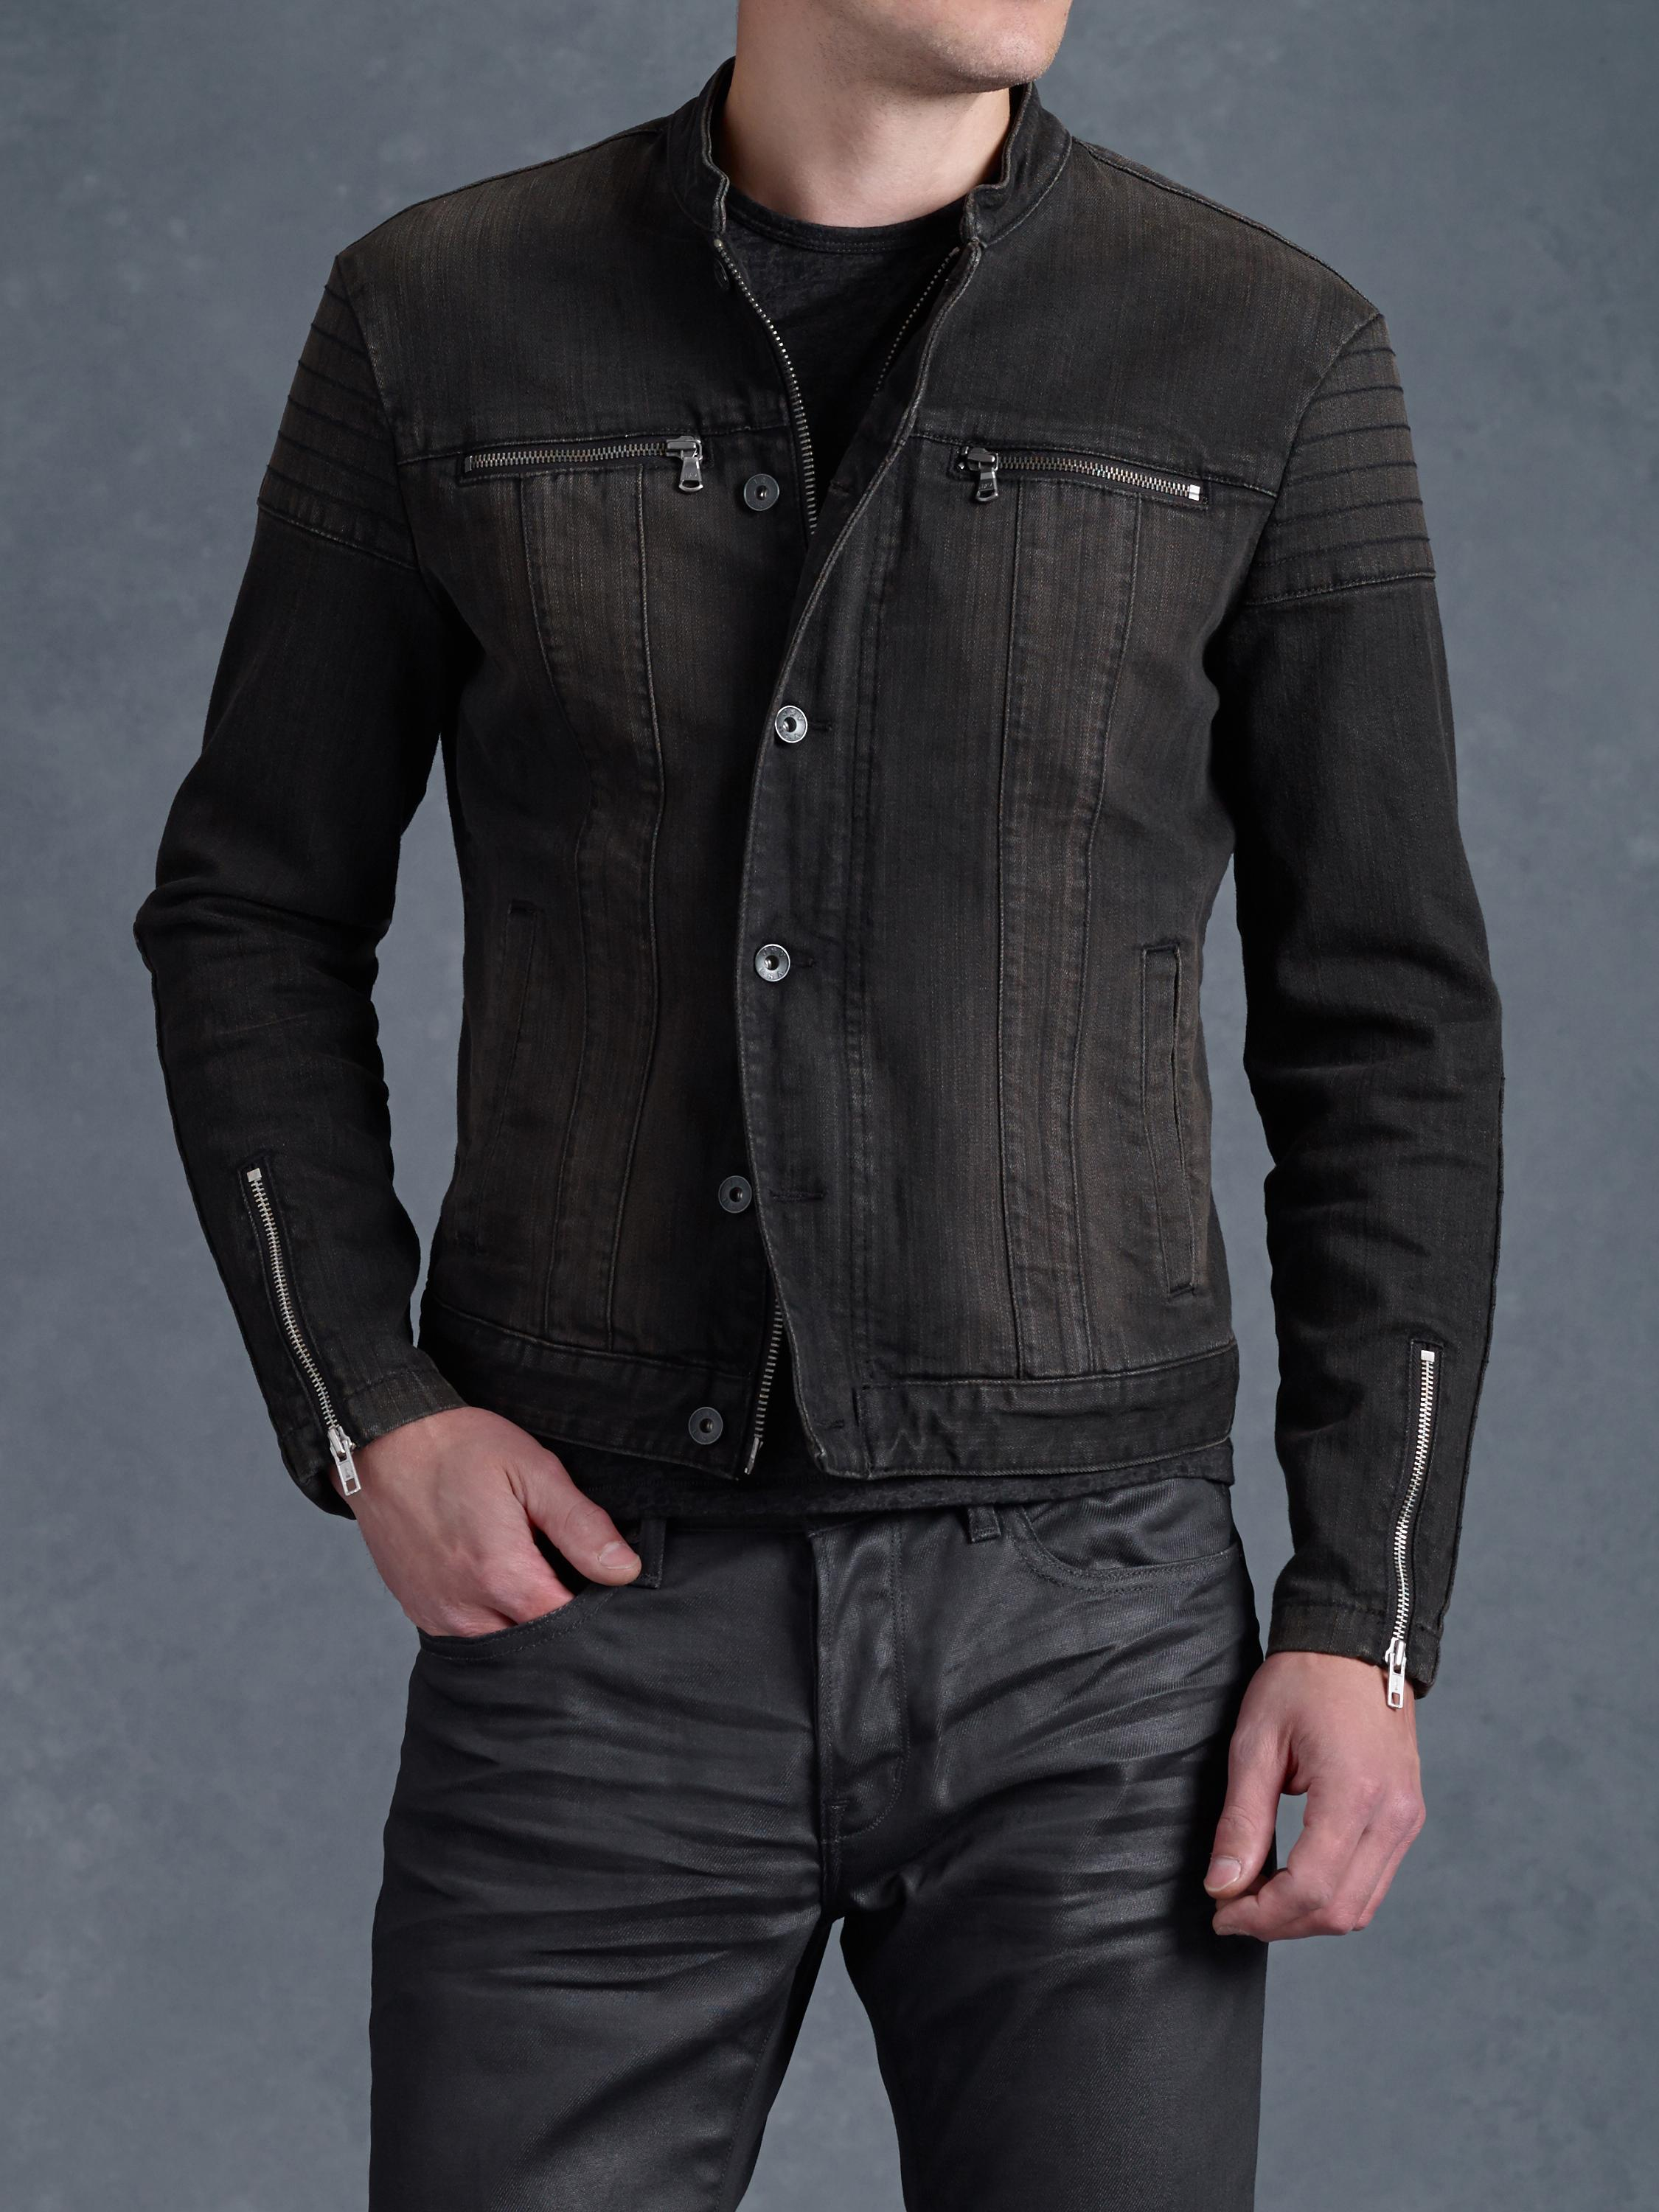 John Varvatos Denim Trapunto Jacket in Gray for Men - Lyst